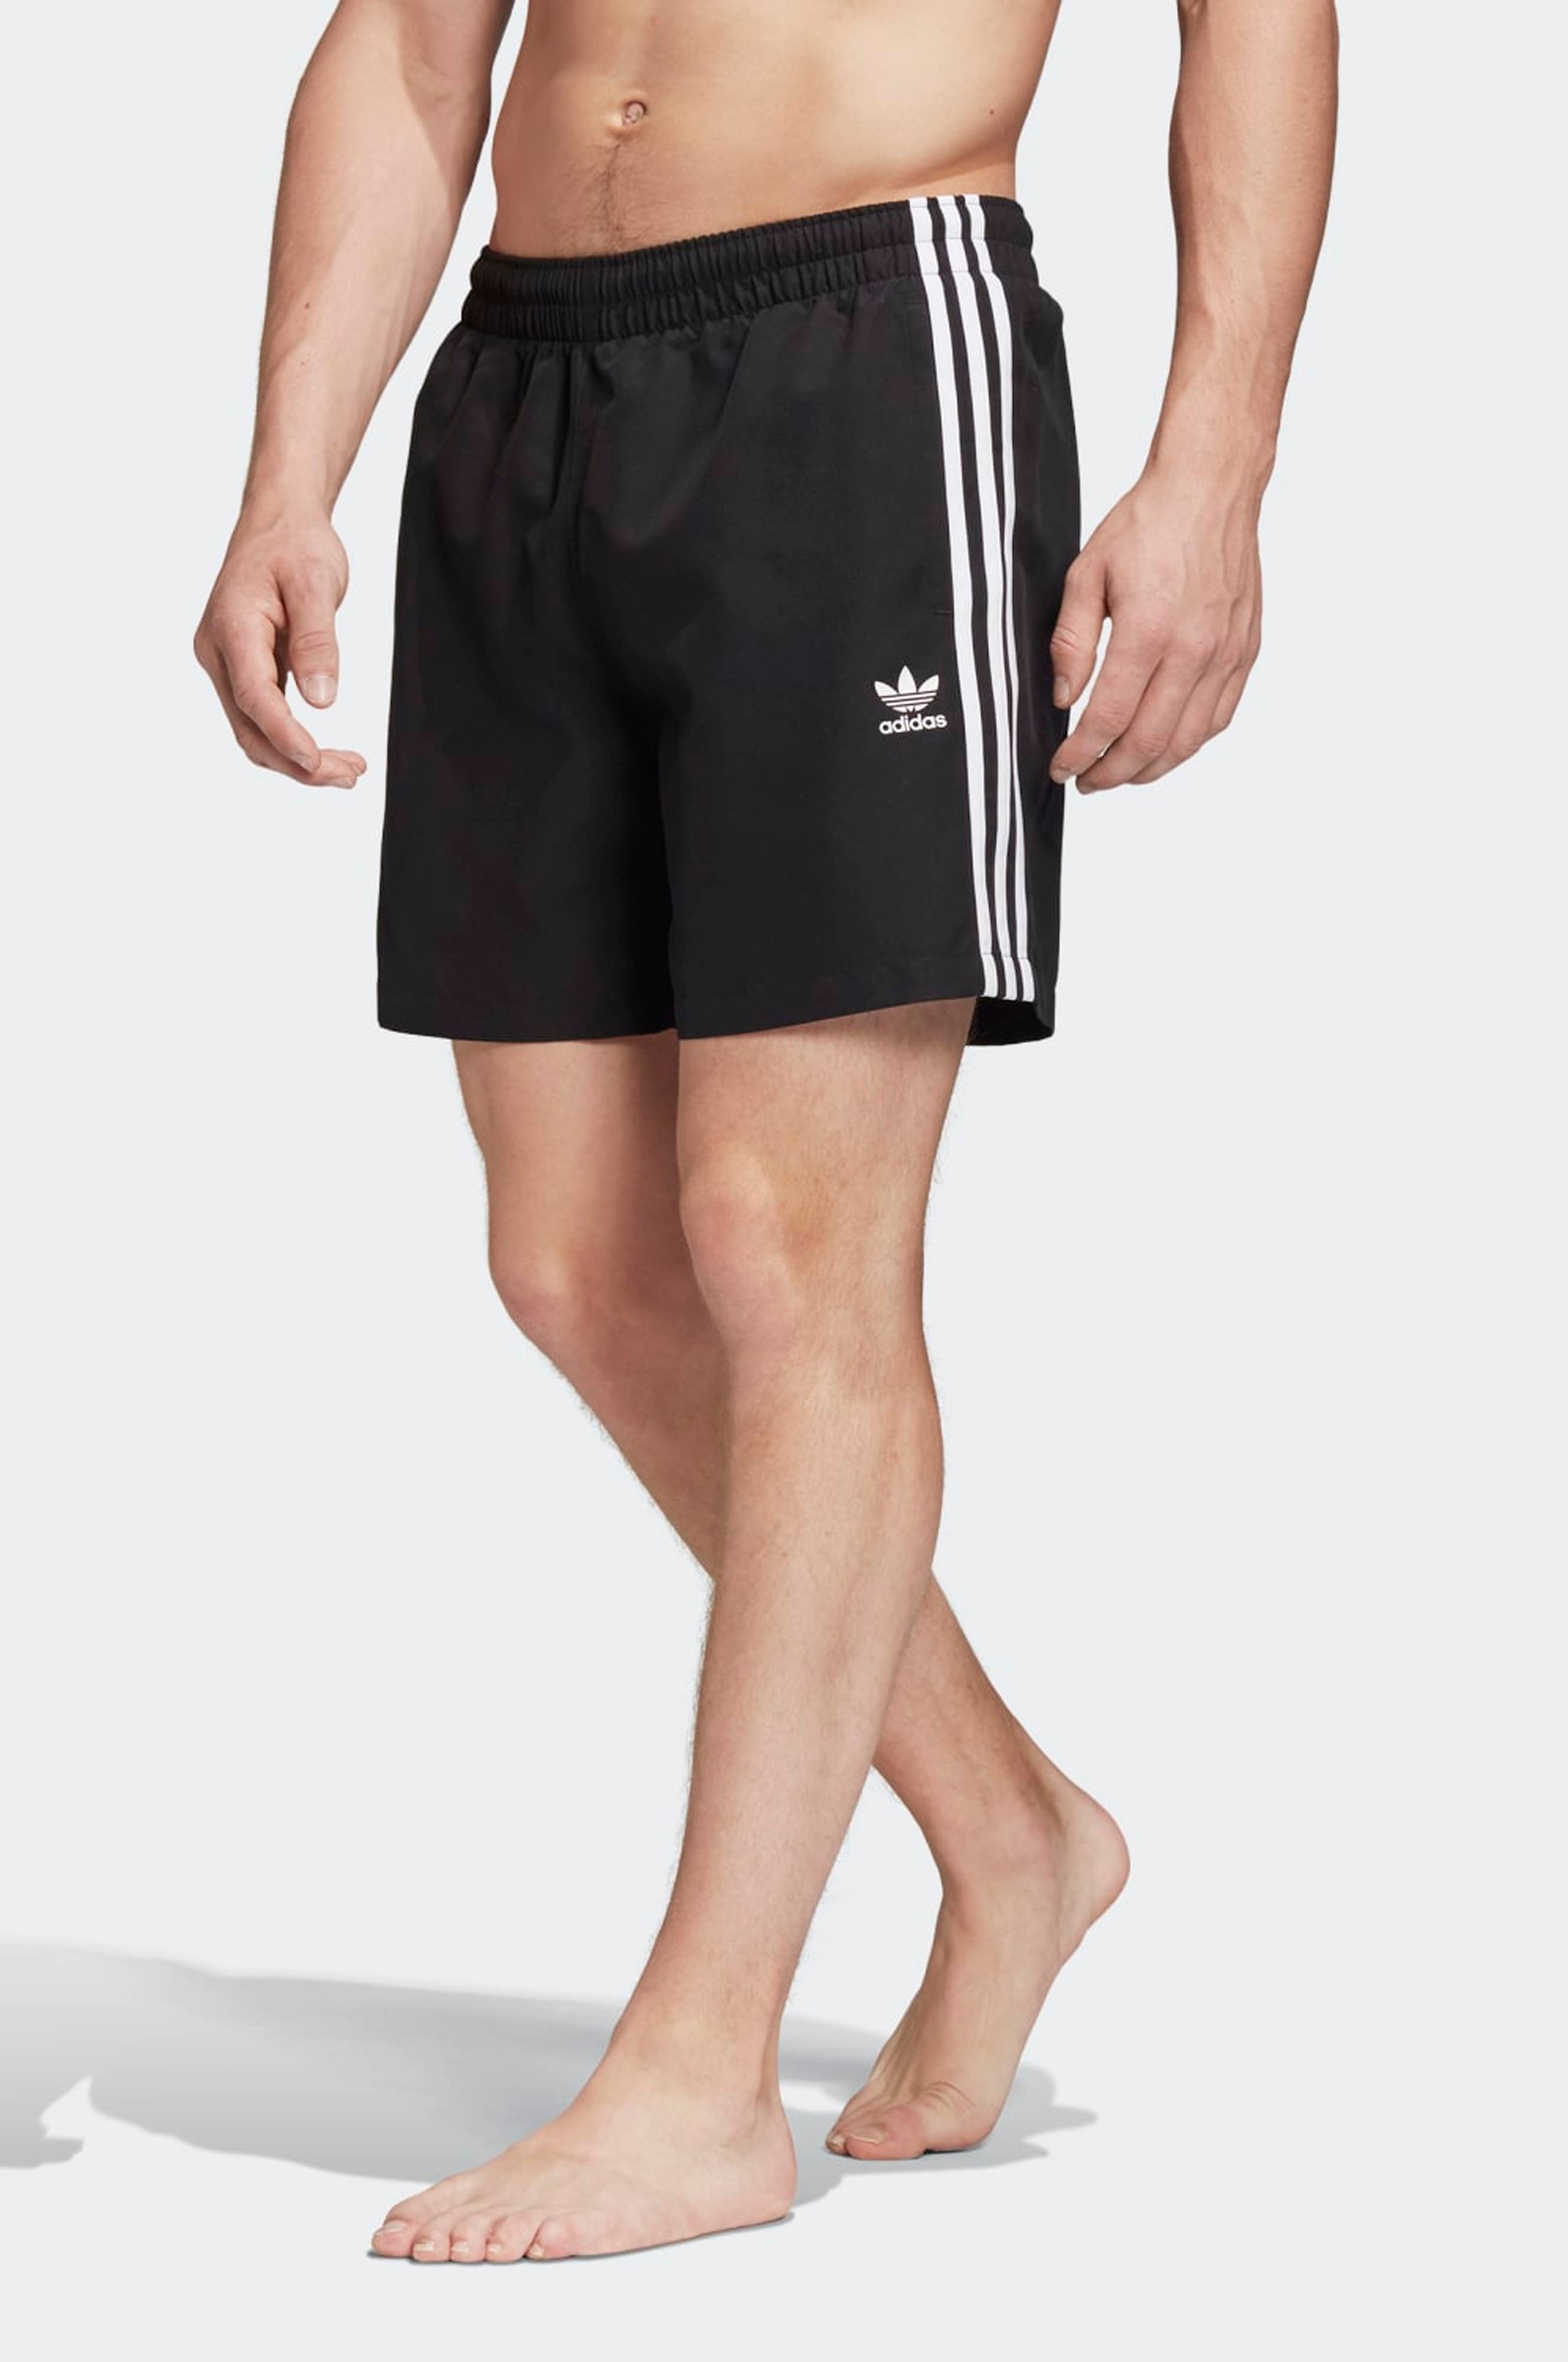 Originals шорты. Шорты adidas Originals 3 Stripes. Шорты адидас ориджинал мужские. Шорты адидас bk7028. Adidas Originals 3-Stripes Swim shorts.